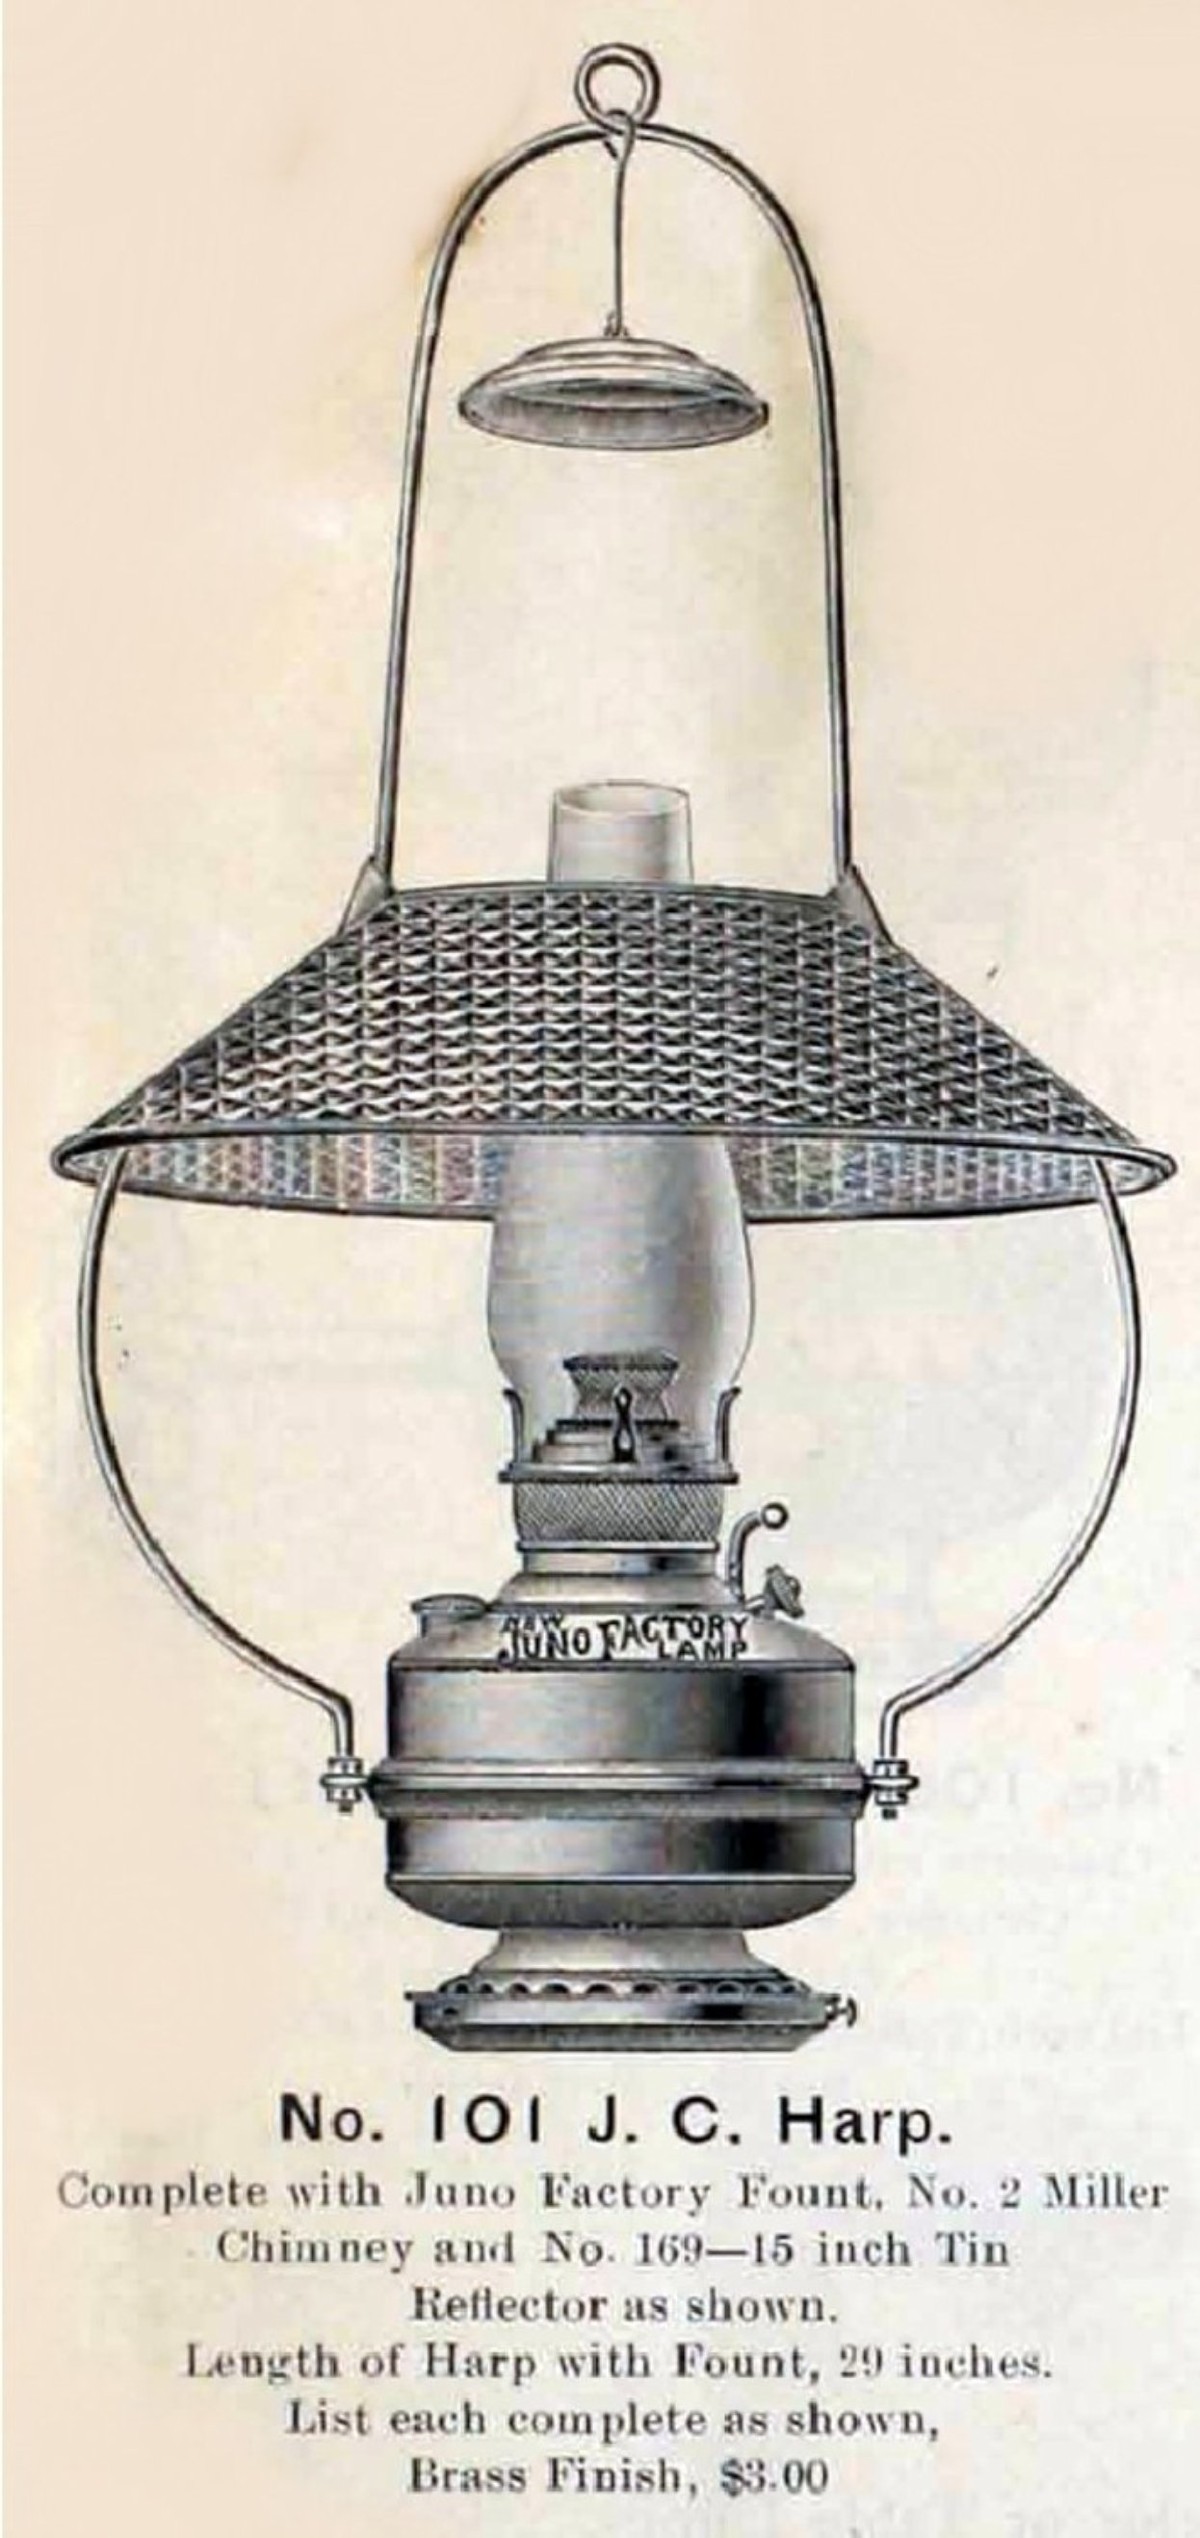 E. Miller Factory Lamp